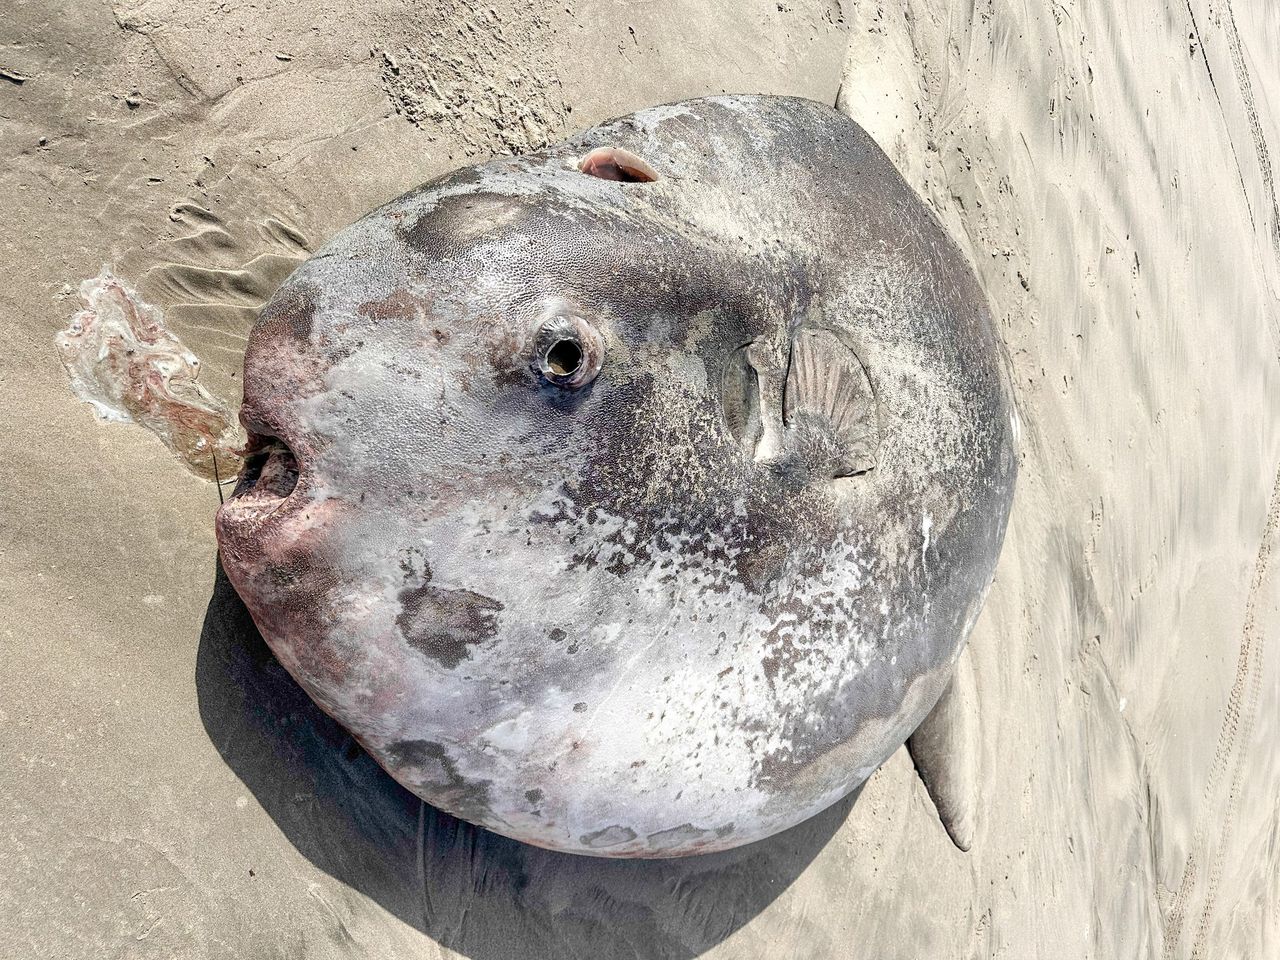 Ocean sunfish washed ashore on Gearhart Beach in Oregon